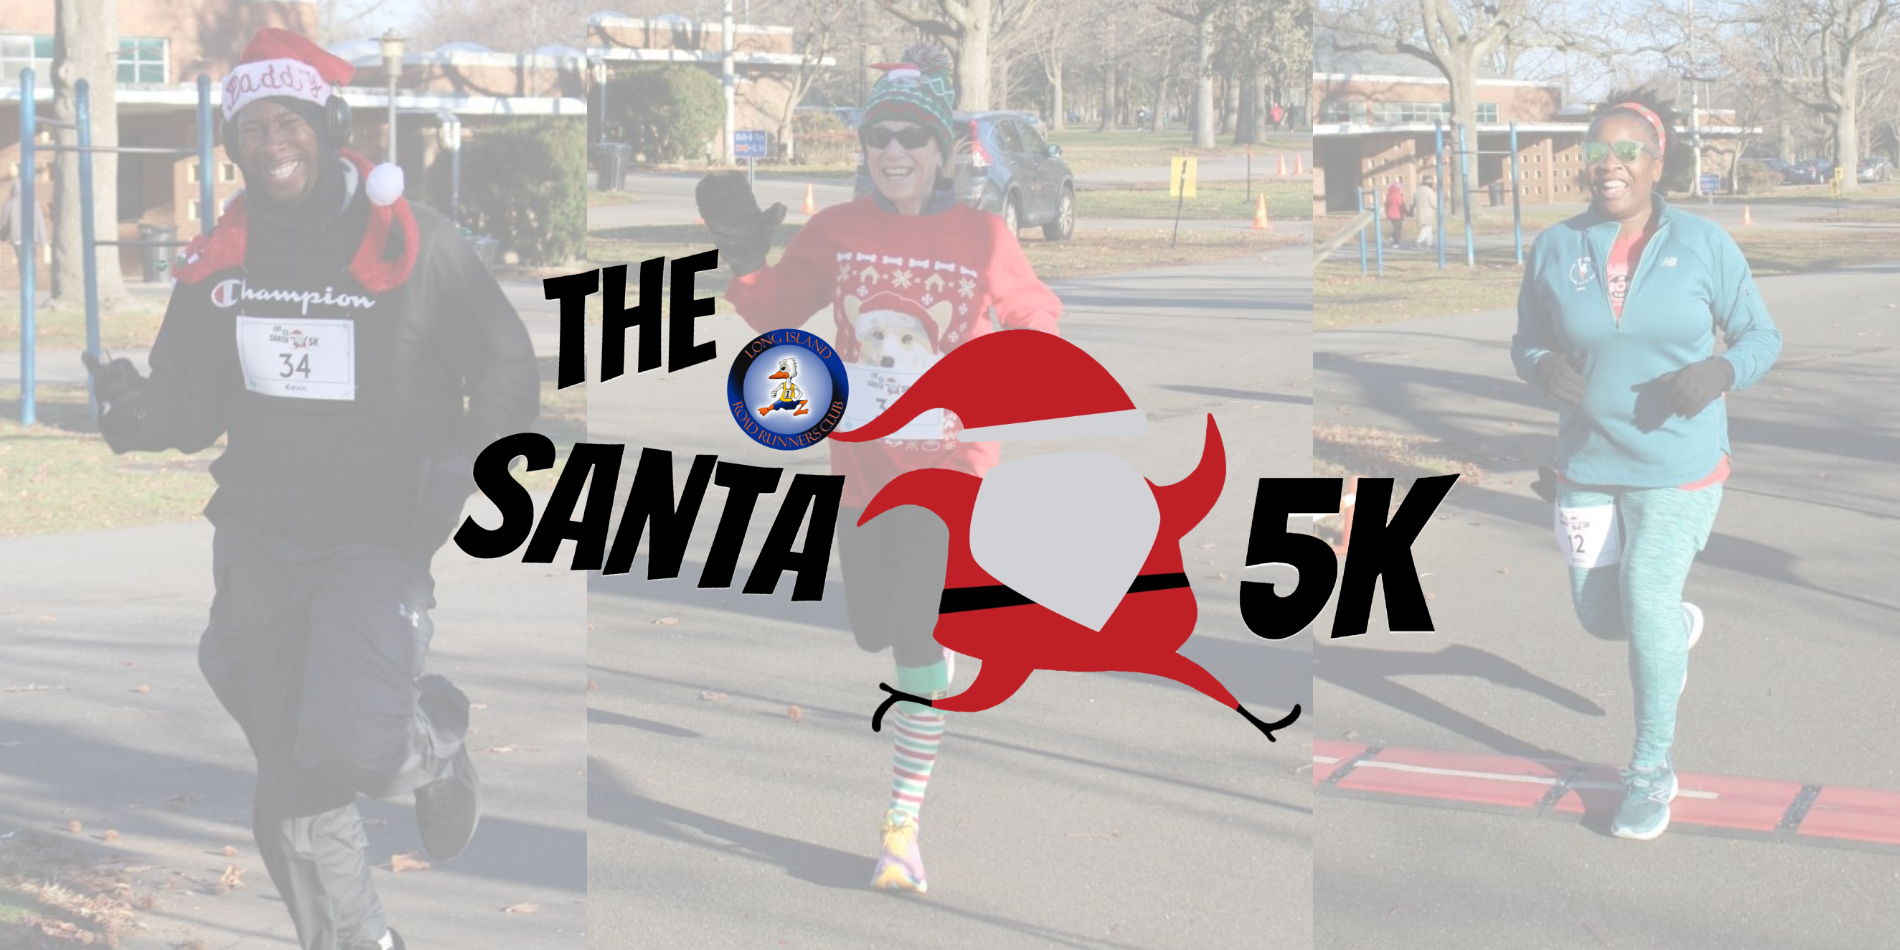 The Santa 5K promotional image